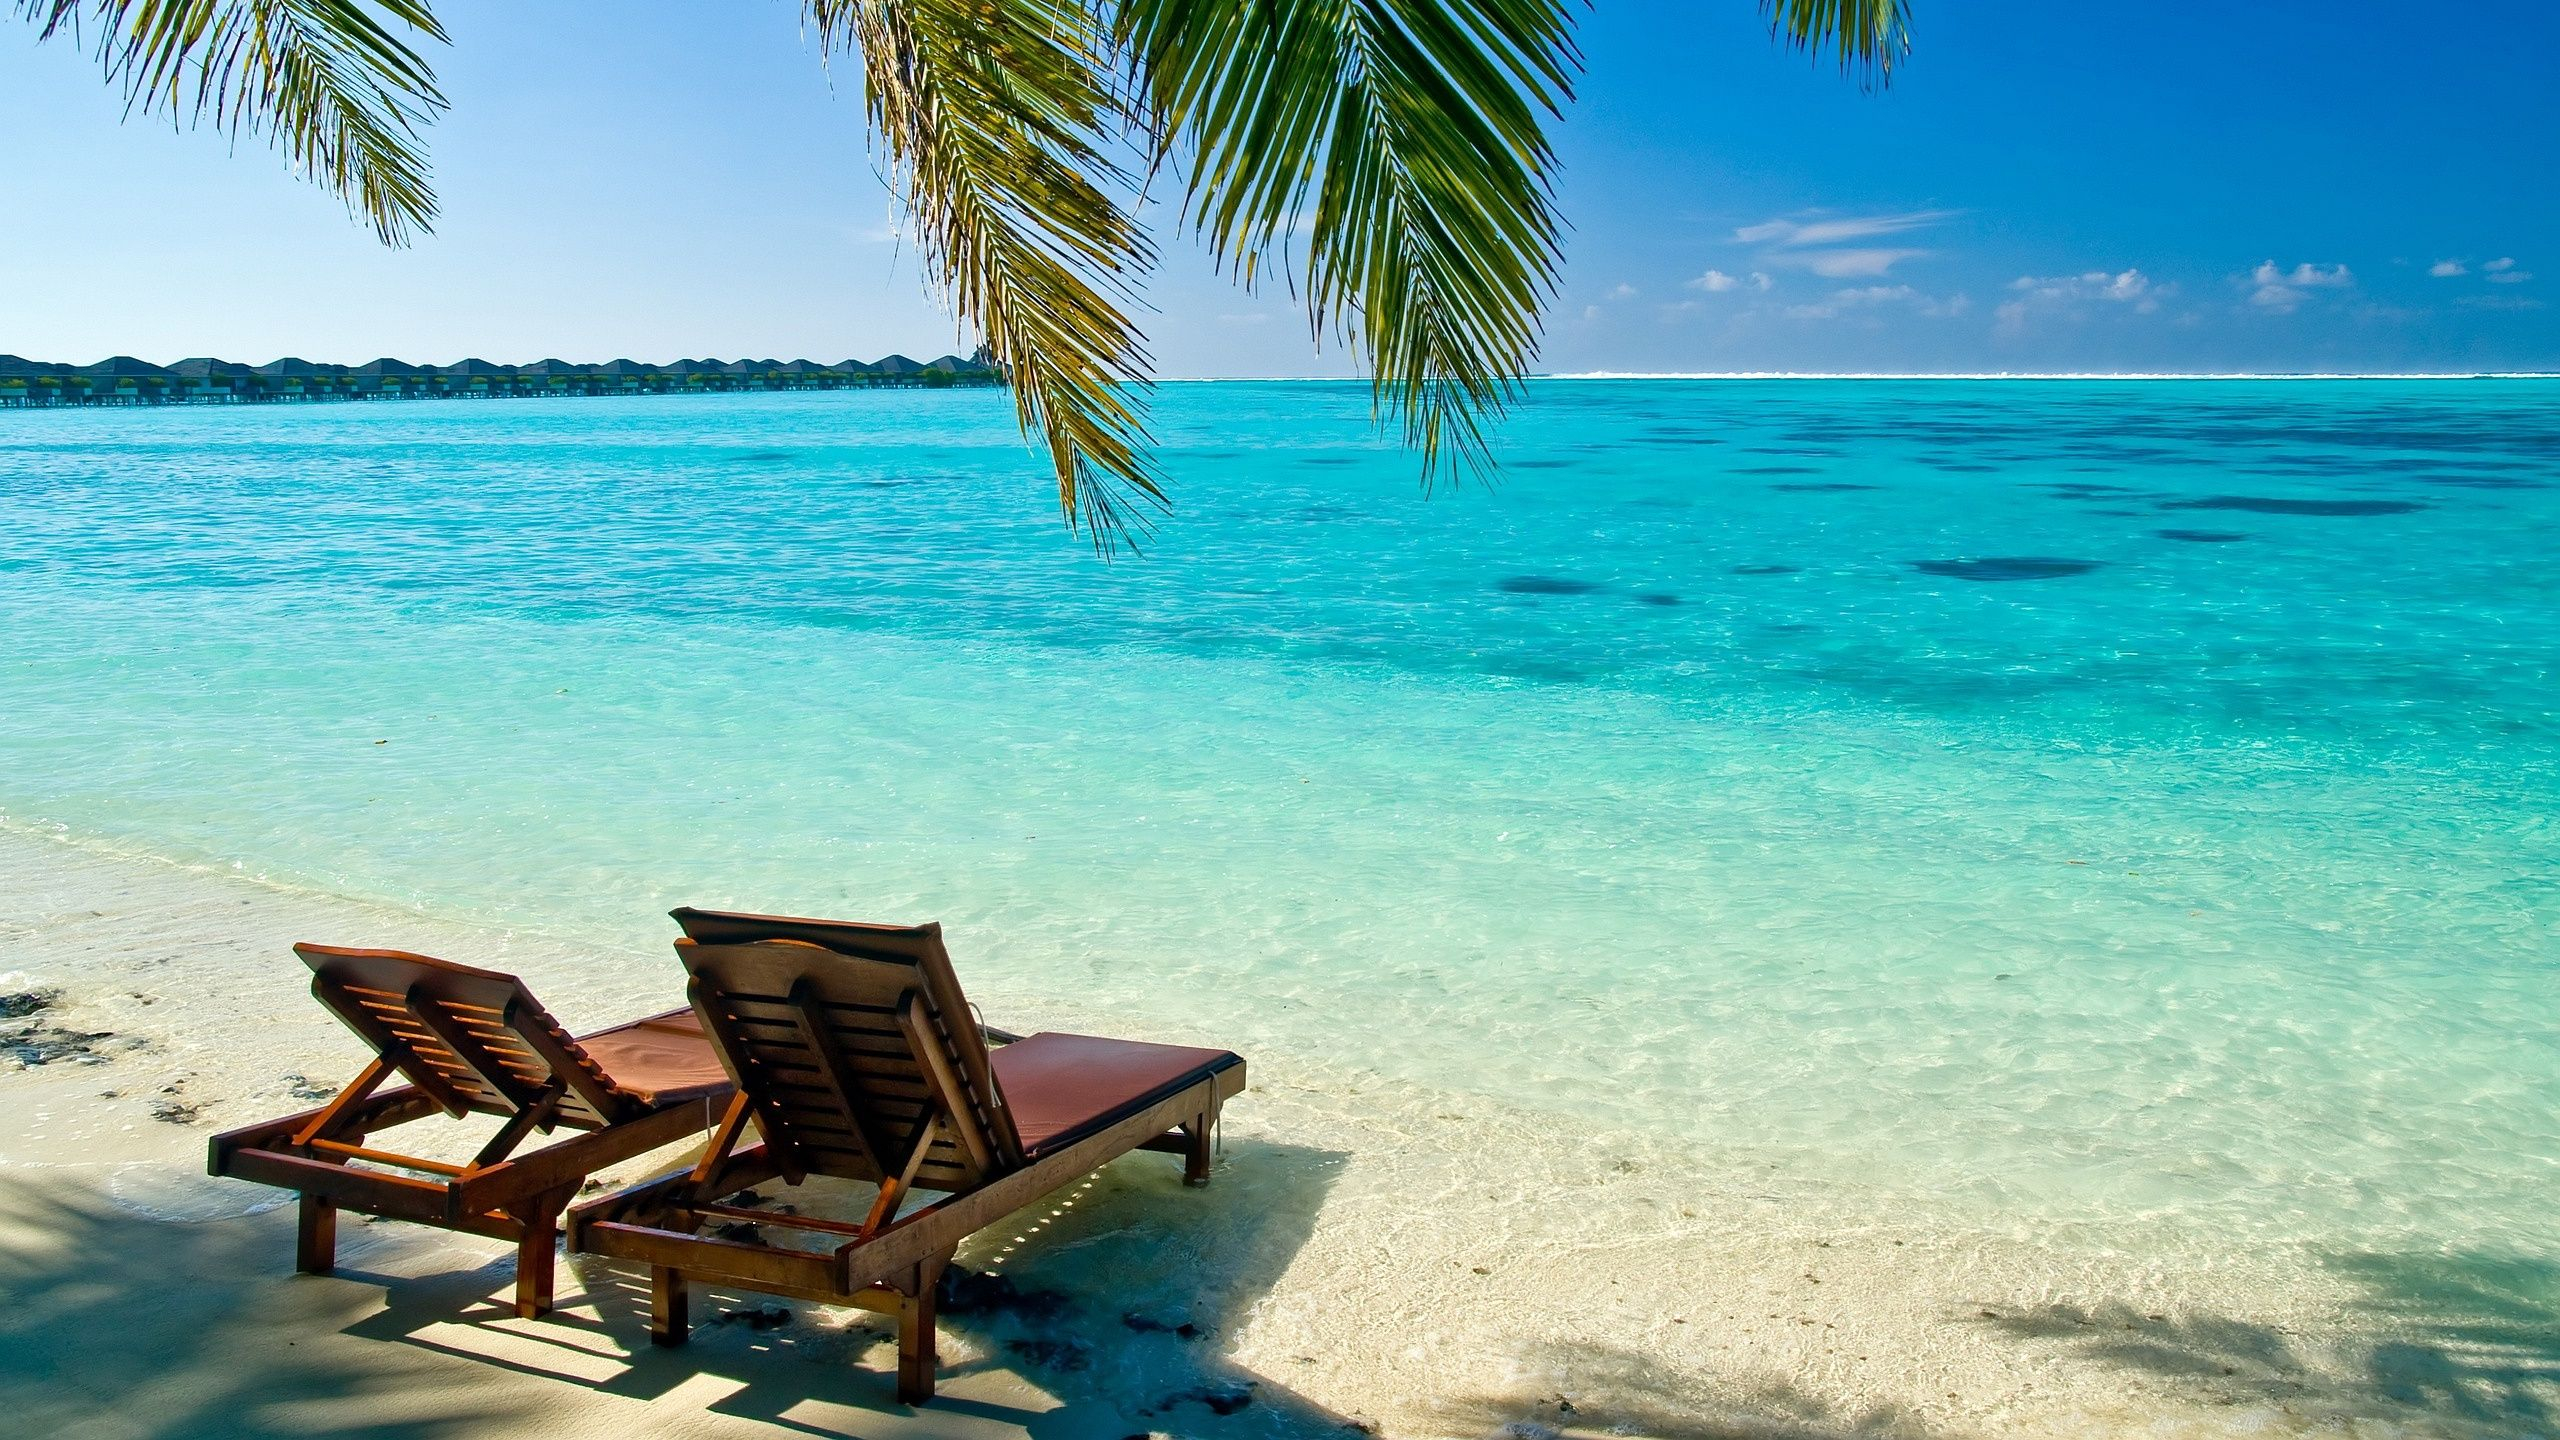 2560x1440 Maldives beach chairs | Beach wallpaper, Island vacation, Tropical islands vacati